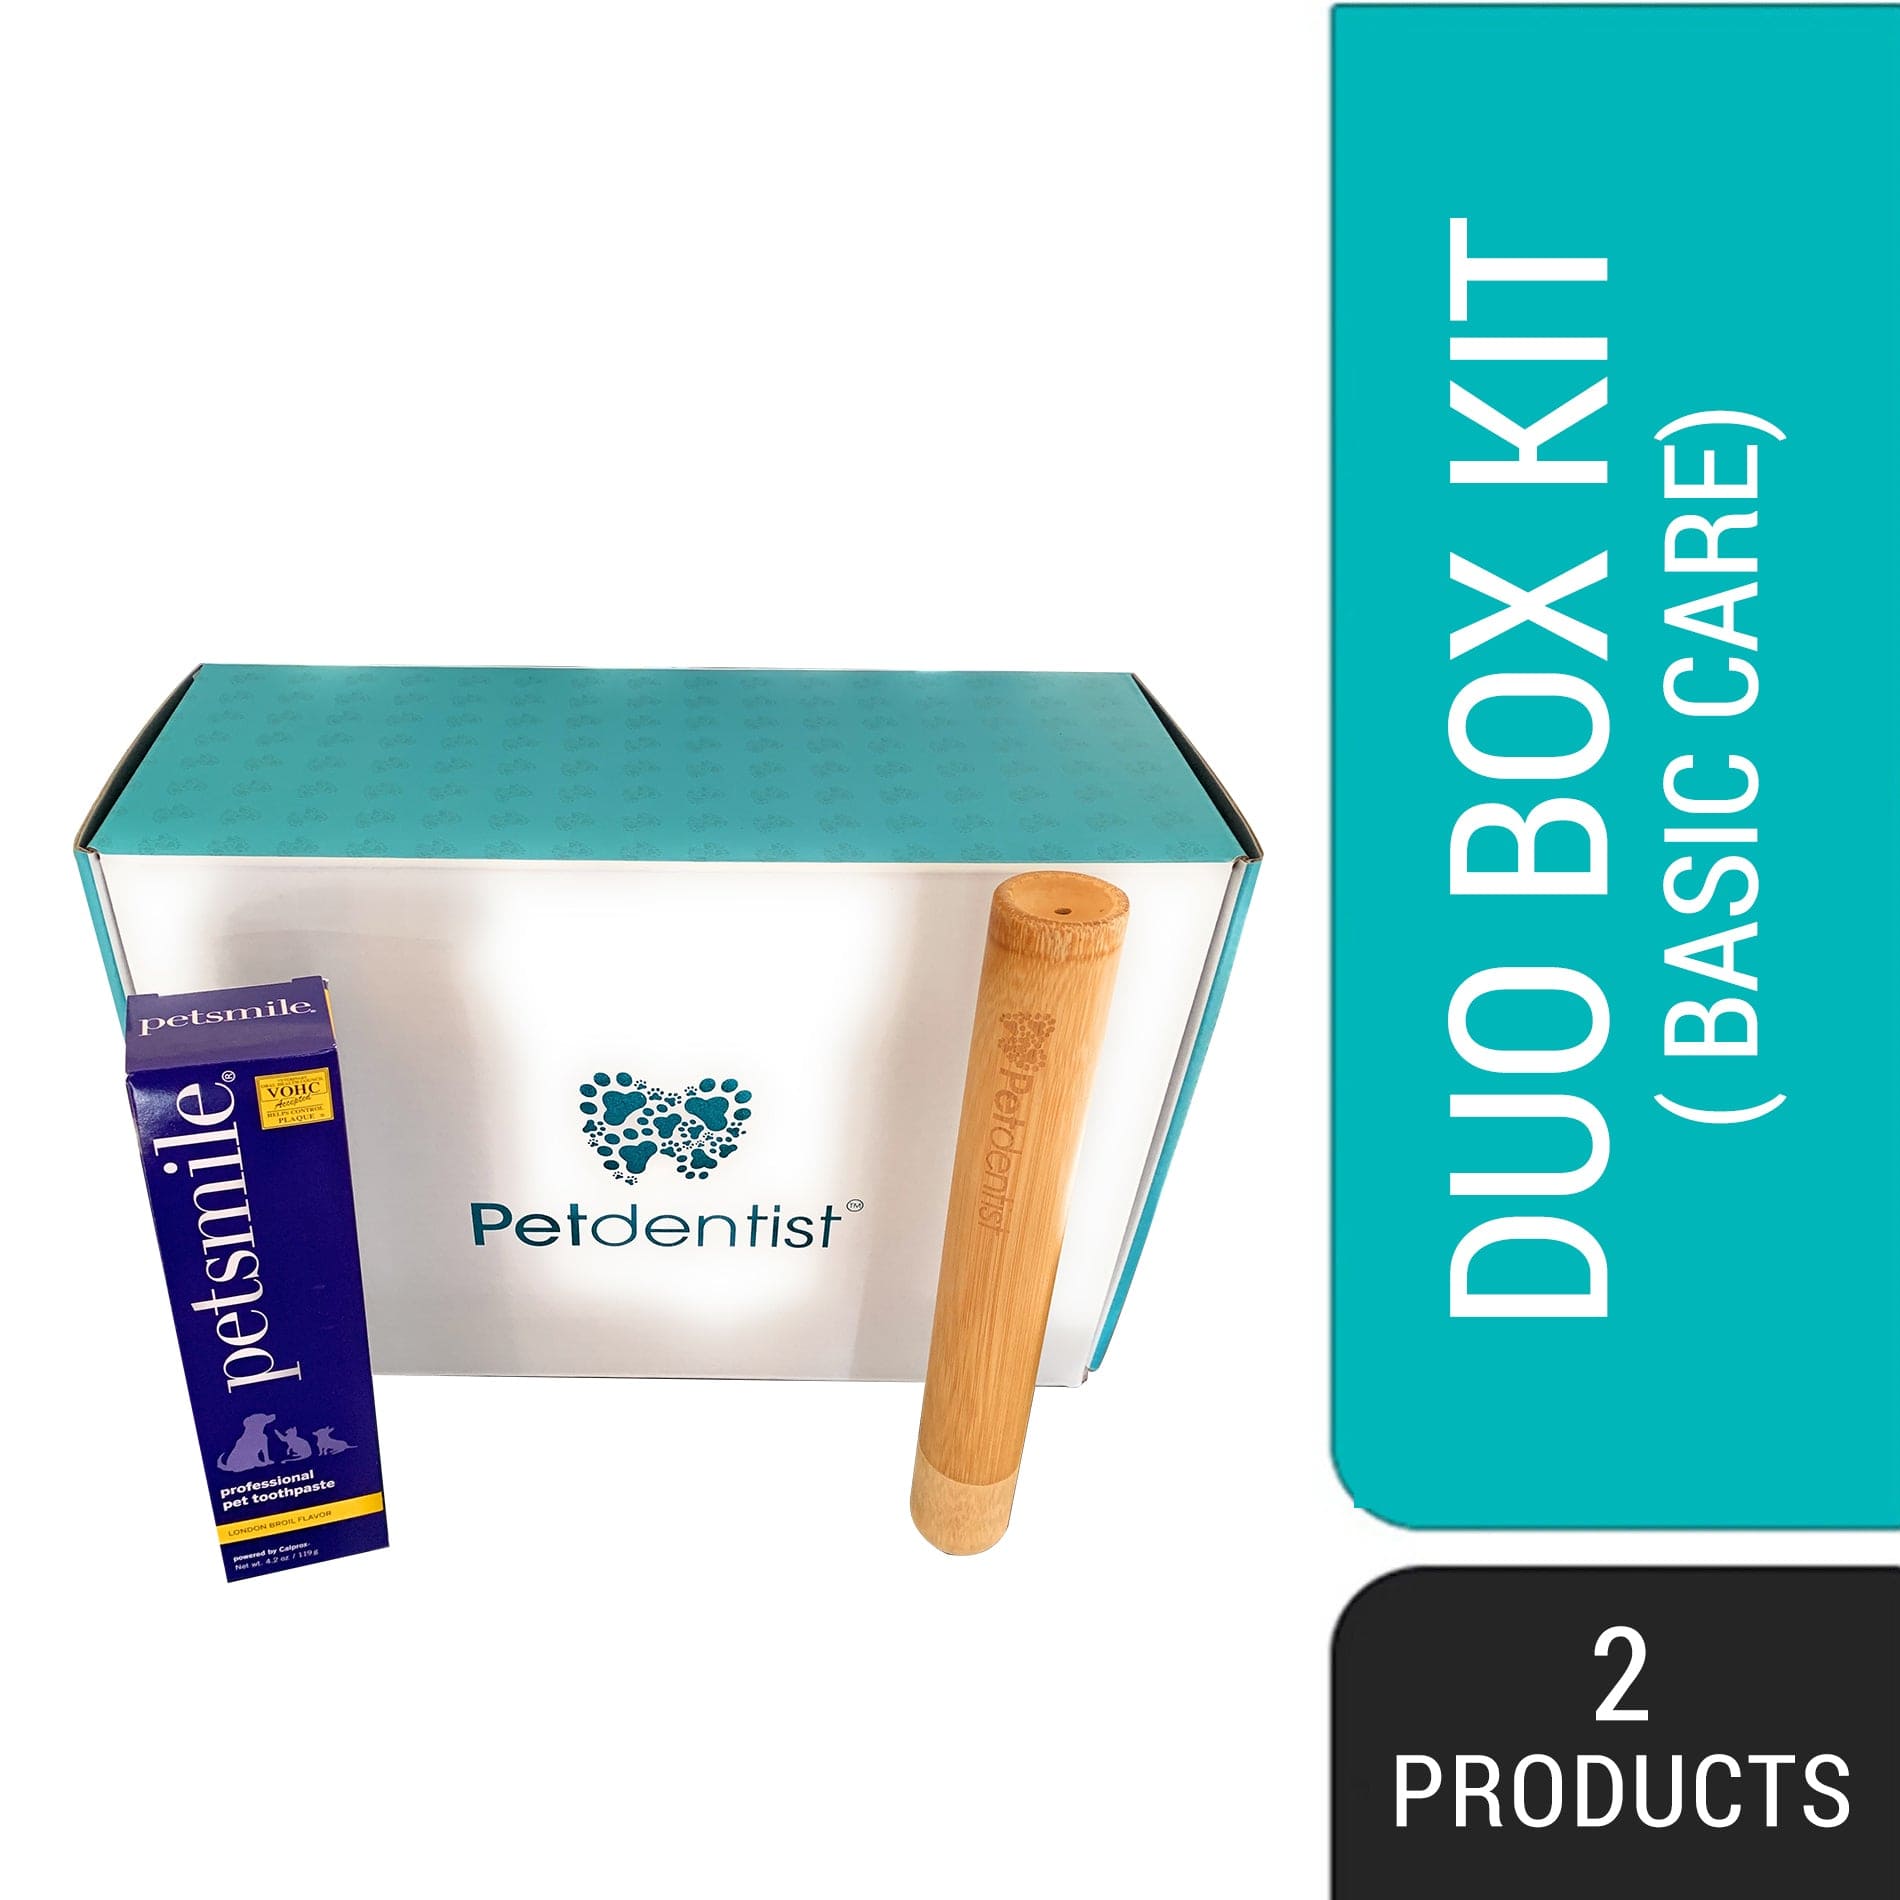 Petdentist® Pet Oral Care Supplies Petdentist®-BASICS DUO Teeth Cleaning Kit Hamper Gift Set Box For ESSENTIAL Pet Dental Care